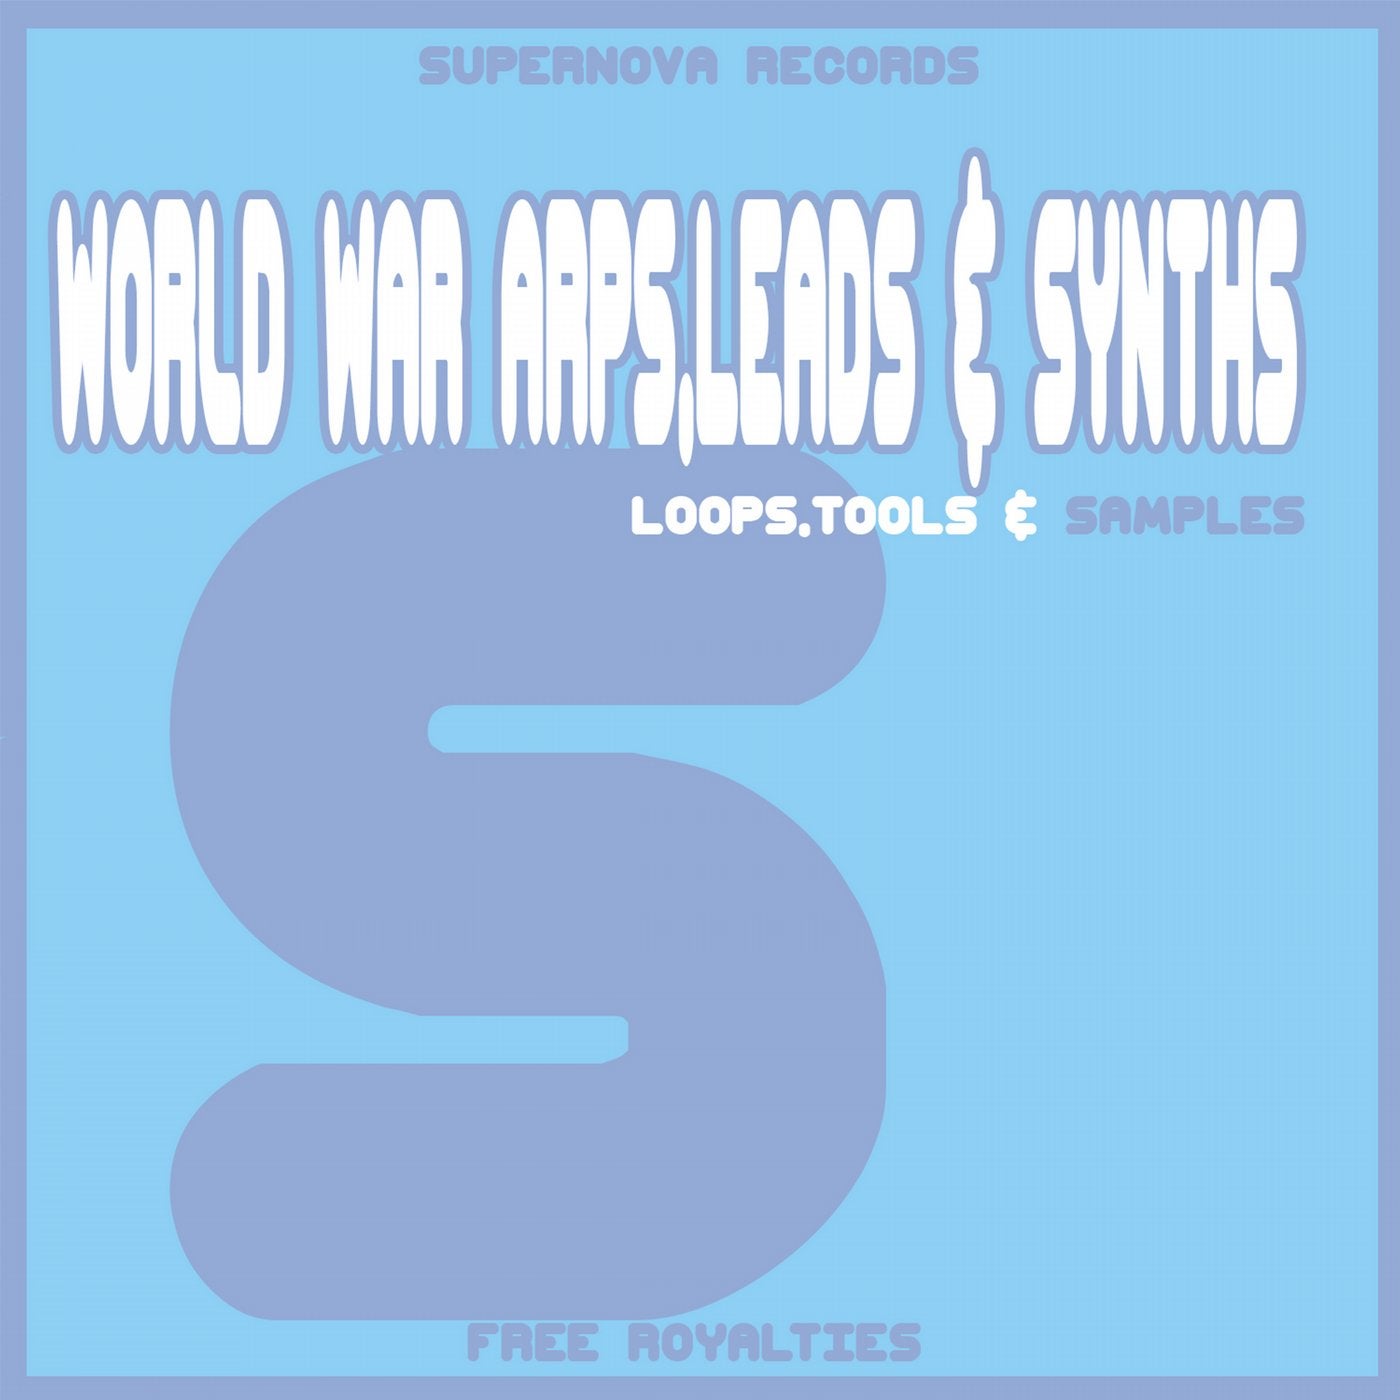 World War ARPS,LEADS & SYNTHS DJ Tools